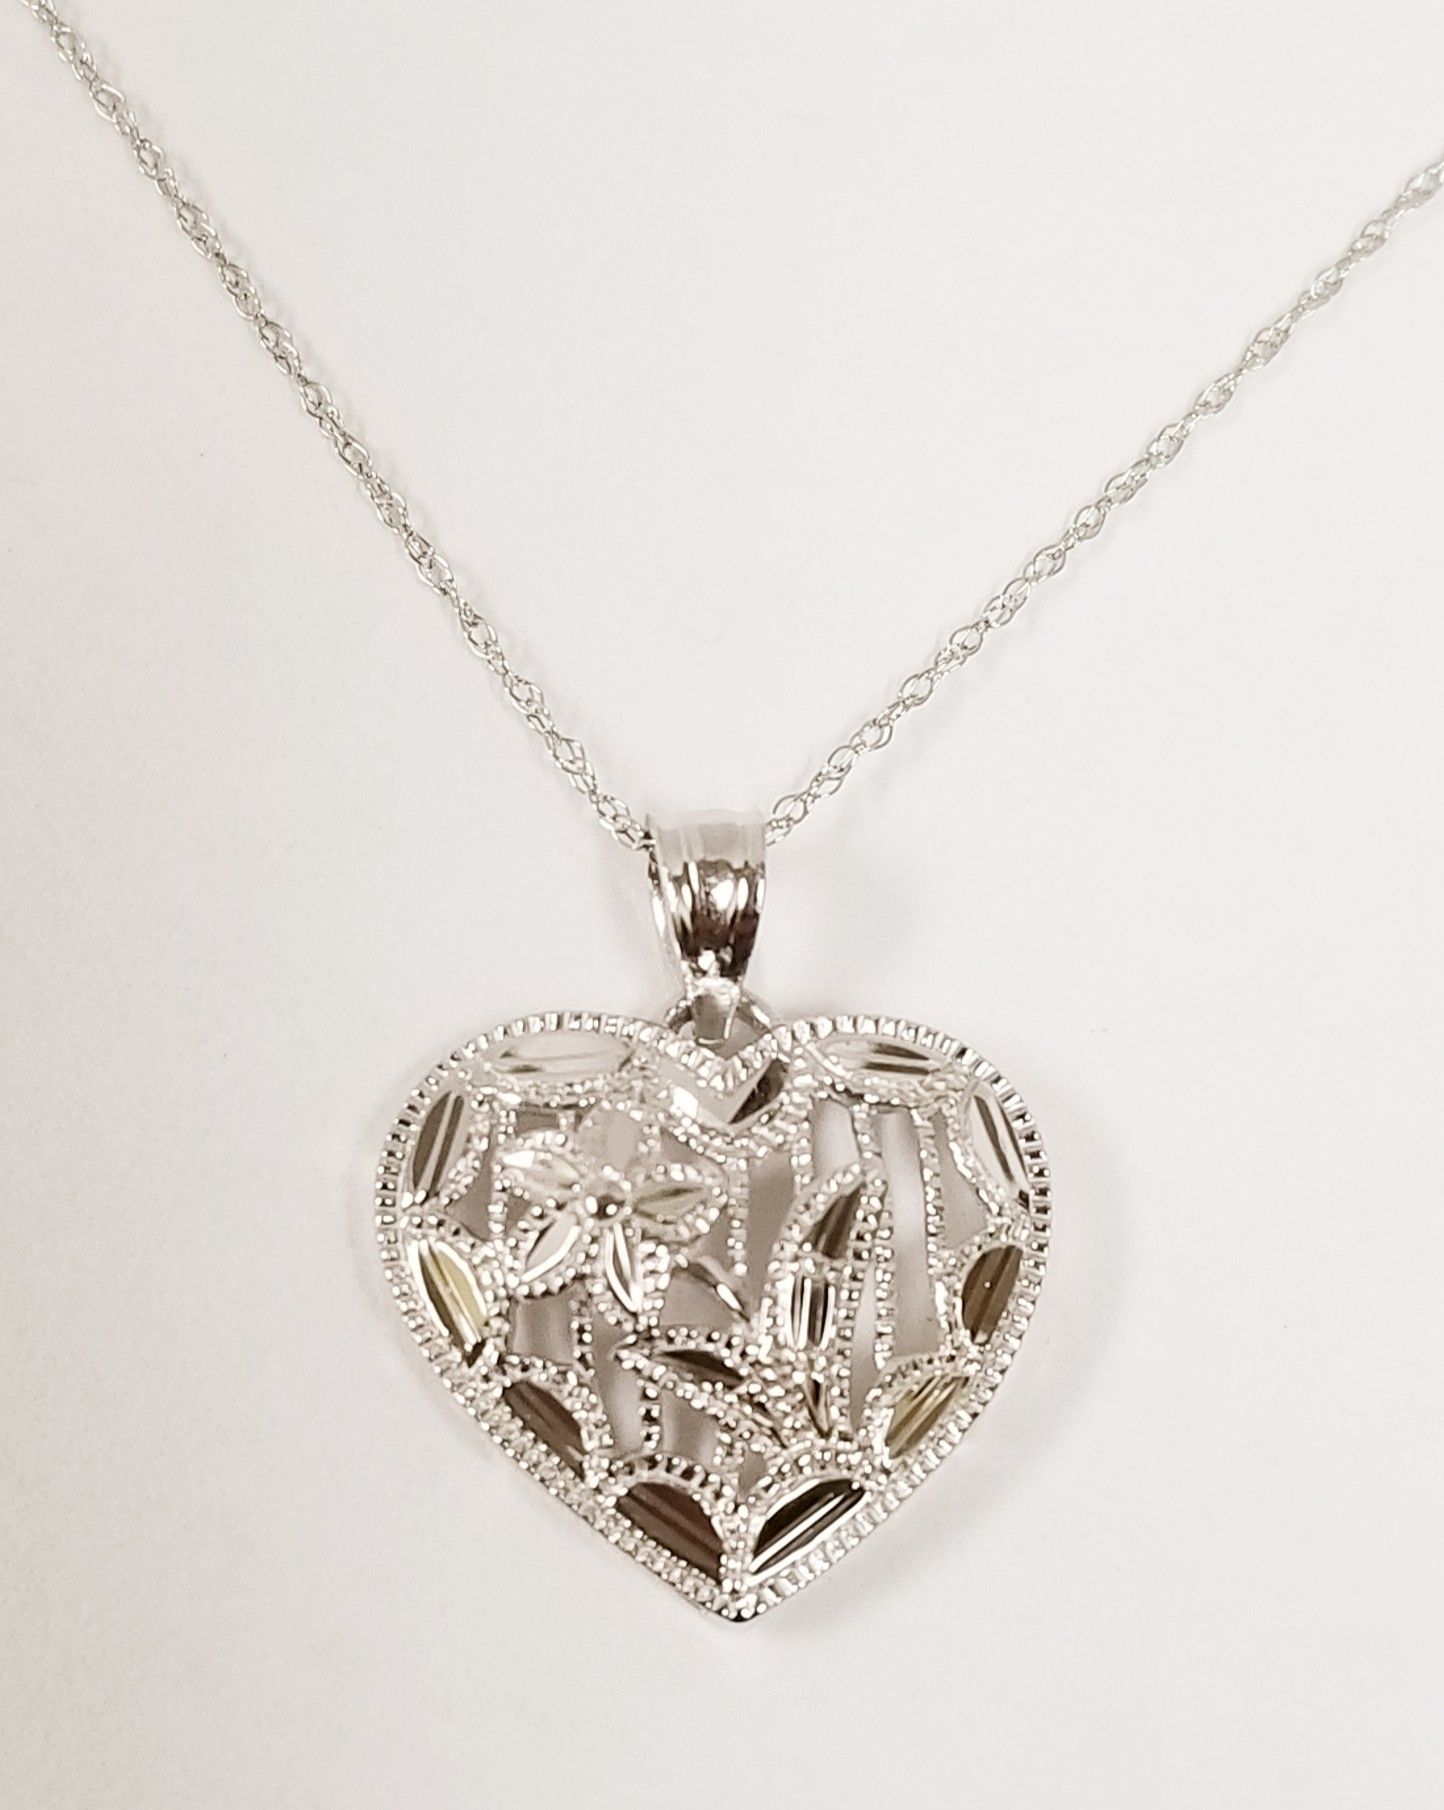 10k White Gold Fine Loose Rope Chain w/ Diamond Cut Heart Pendant